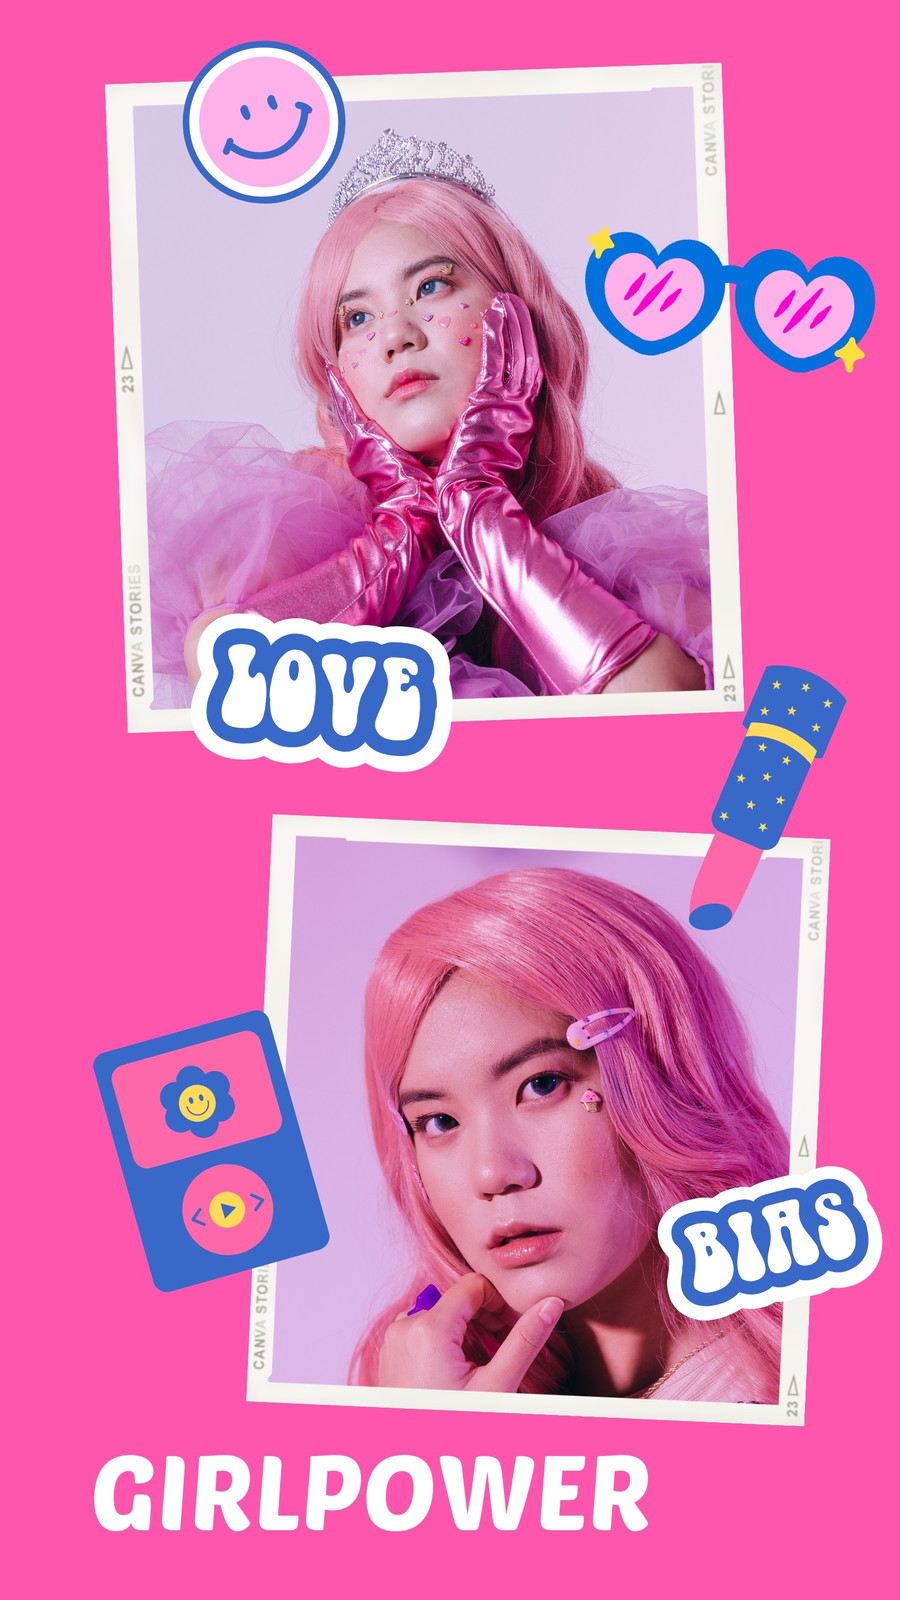 y2k aesthetic wallpaper pink hello kitty - Lemon8 Search